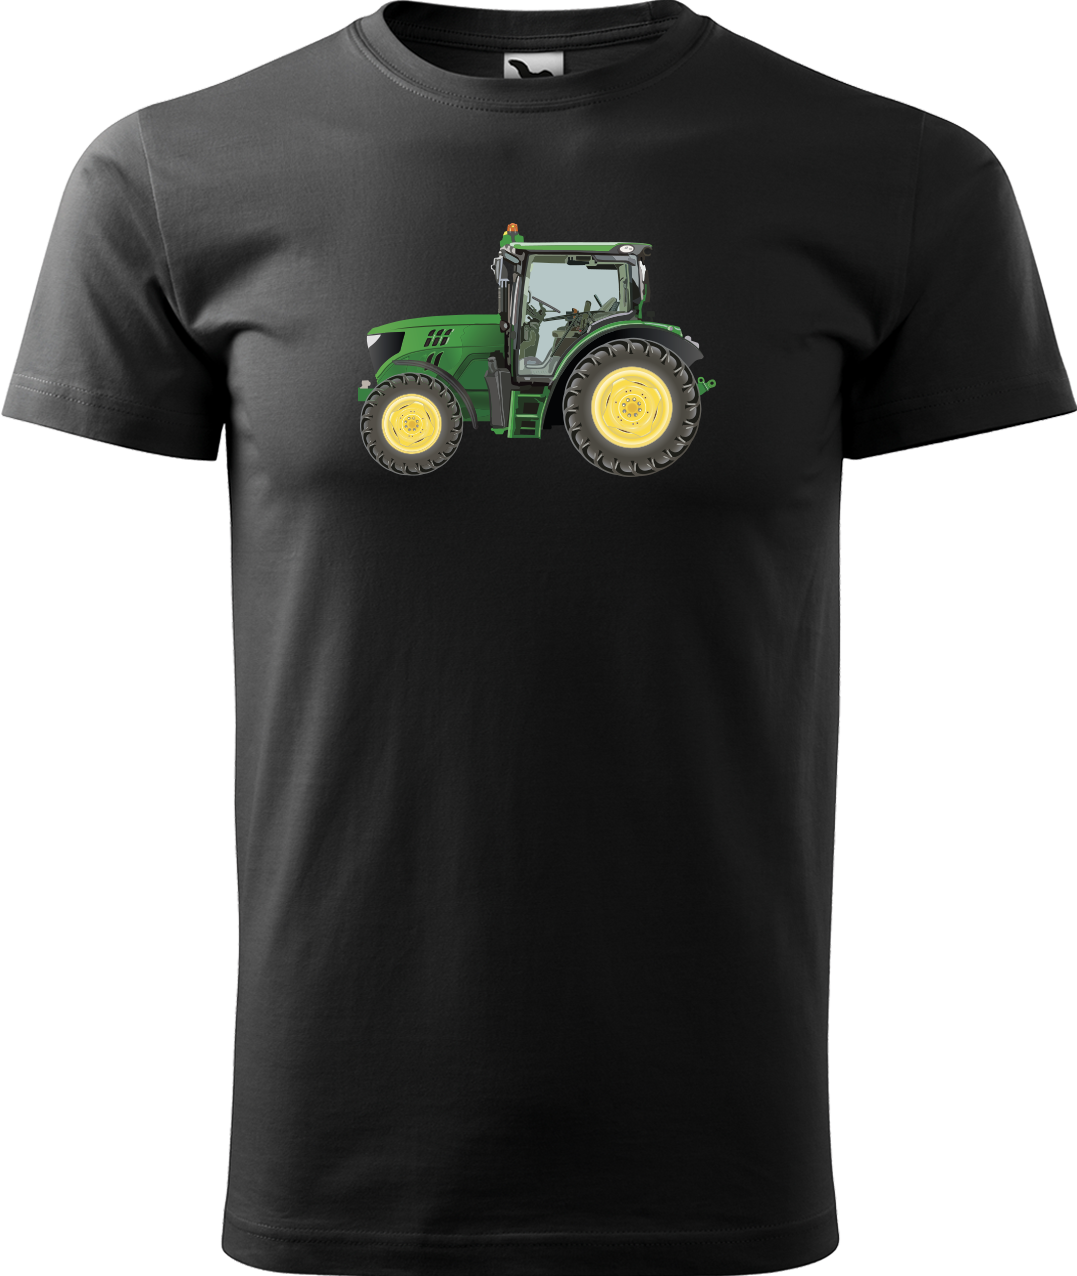 Tričko s traktorem - Zelený traktor Velikost: XL, Barva: Černá (01)